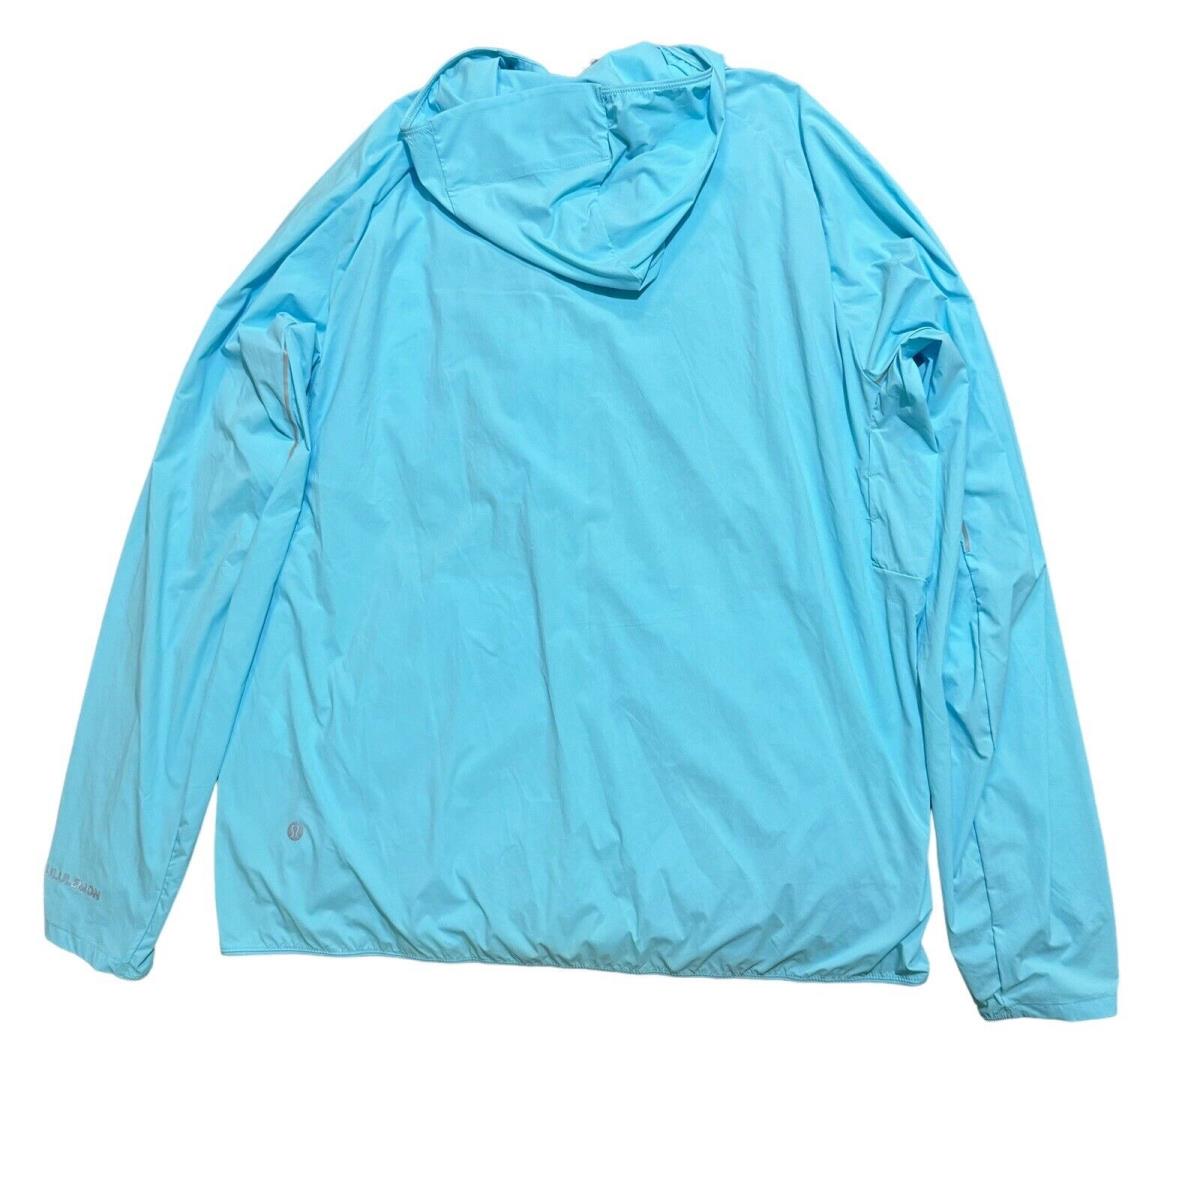 Lululemon Fast Free Jacket Water Resistant Reflective Size XL Cyan Blue